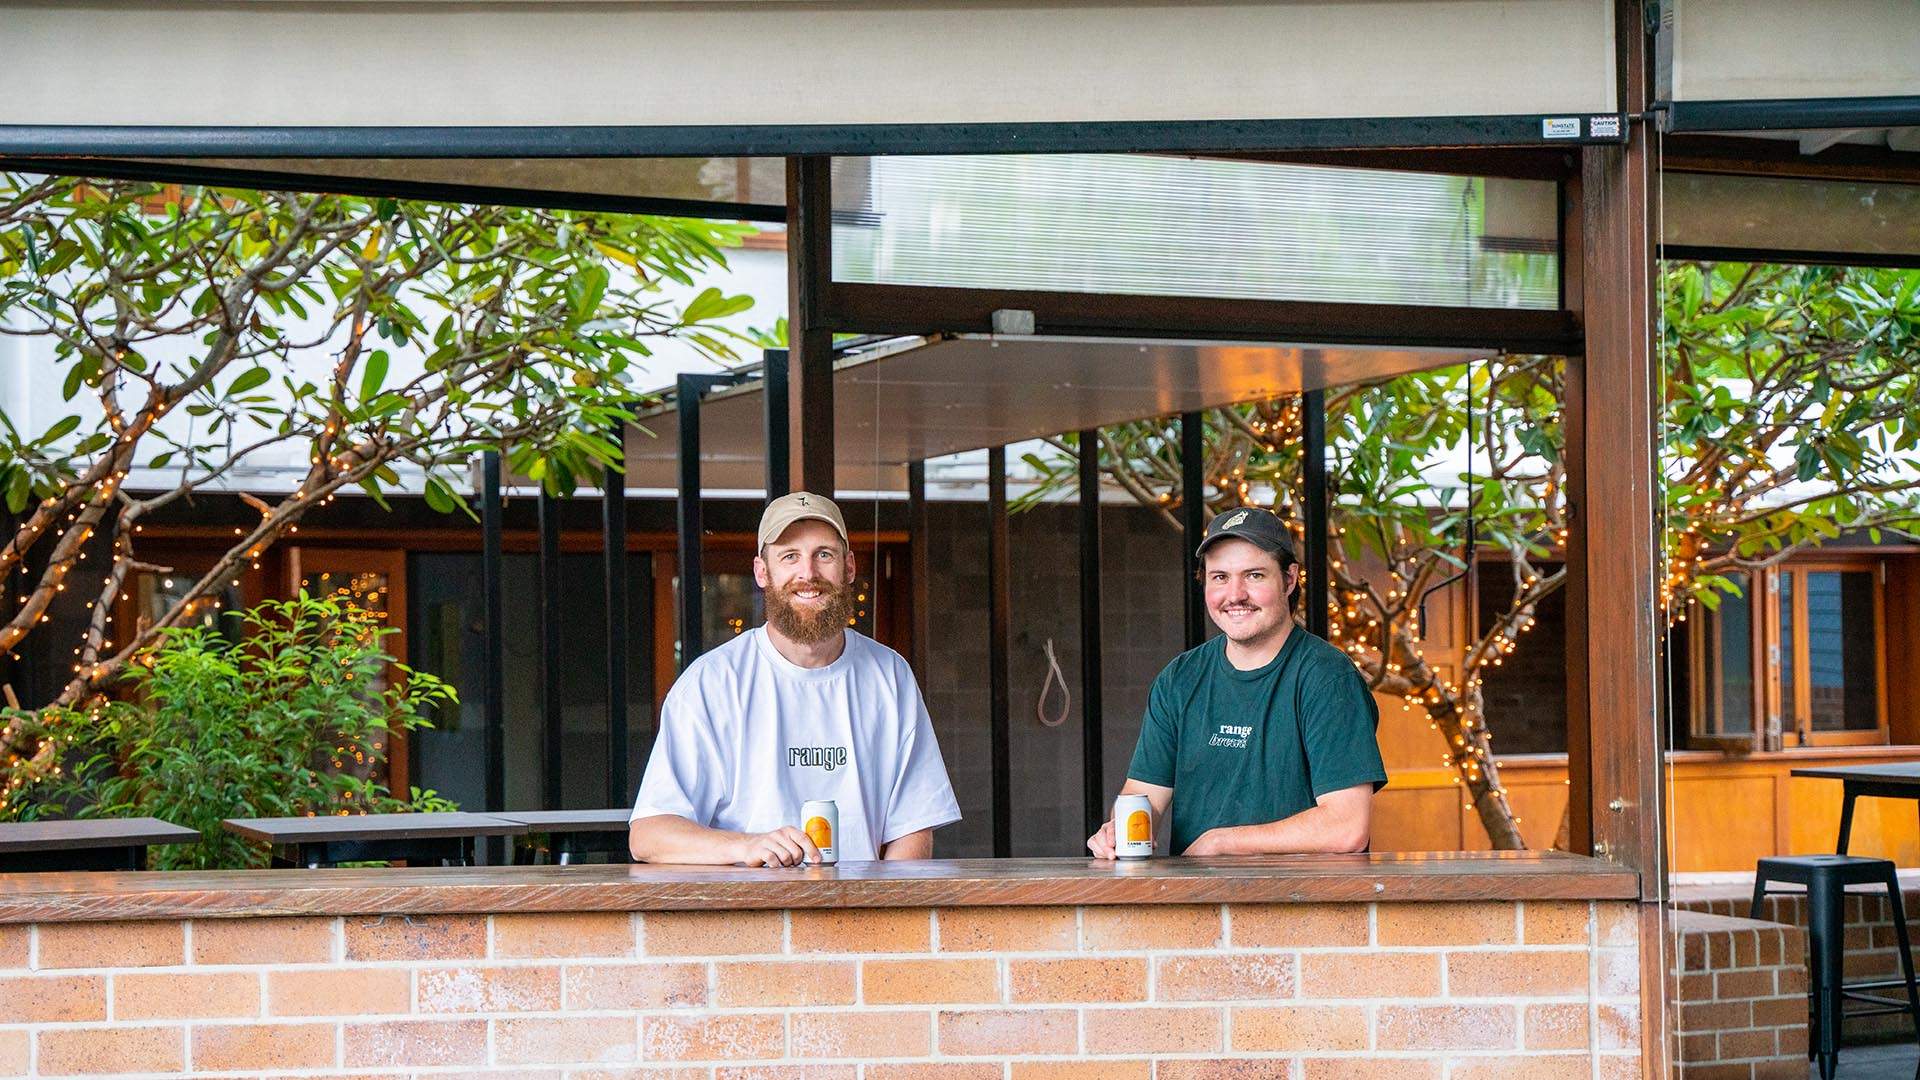 Coming Soon: Patio Is the Leafy New Neighbourhood Bar Bringing Range Brewing's Beers to Rosalie